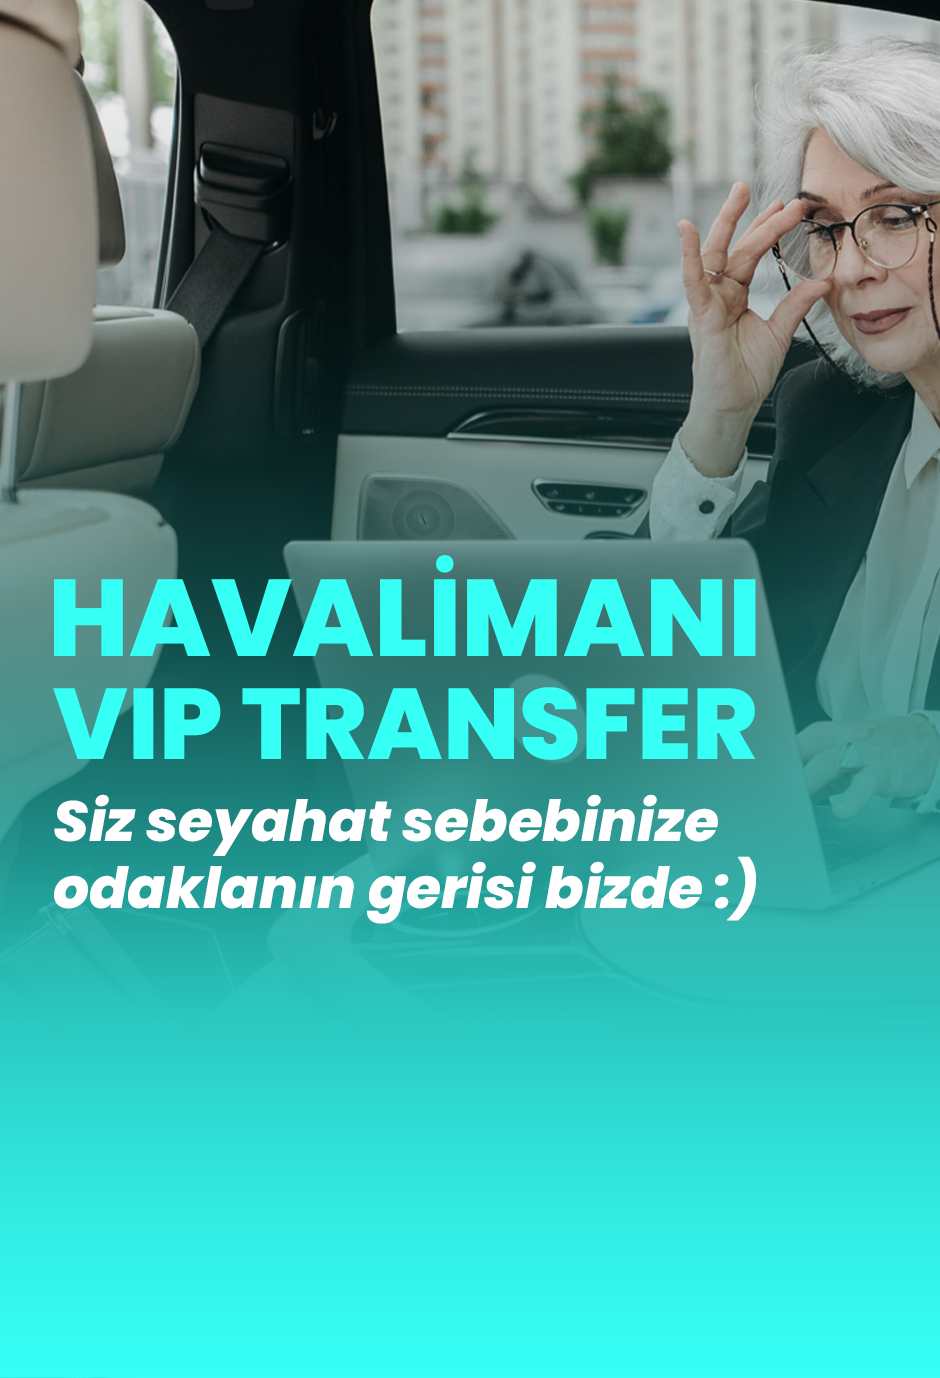 Airport VIP Transfer Service